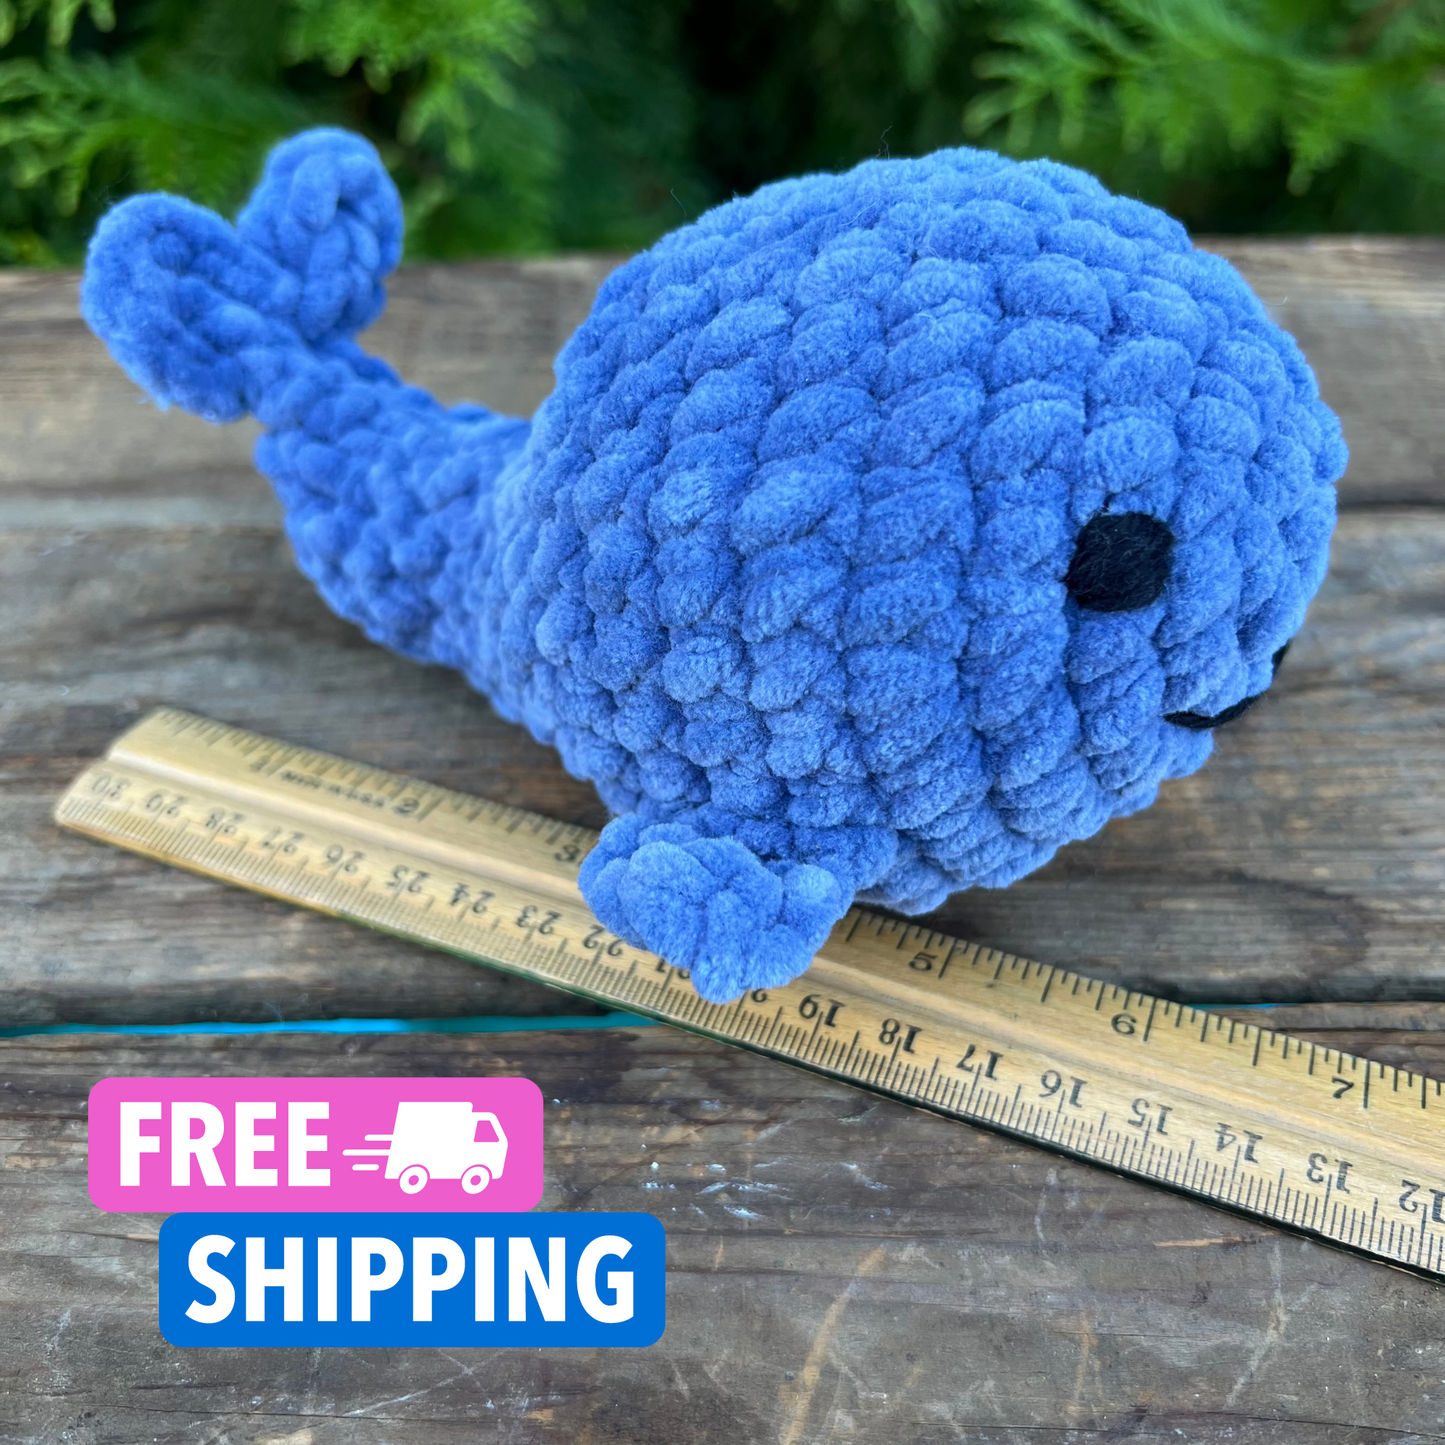 Whale Plushie.  Soft Whale Plush Amigurumi. READY TO SHIP Whale Shower Gift. Handmade crochet whale / Cute Whale Plush /Smiling Whale Toy